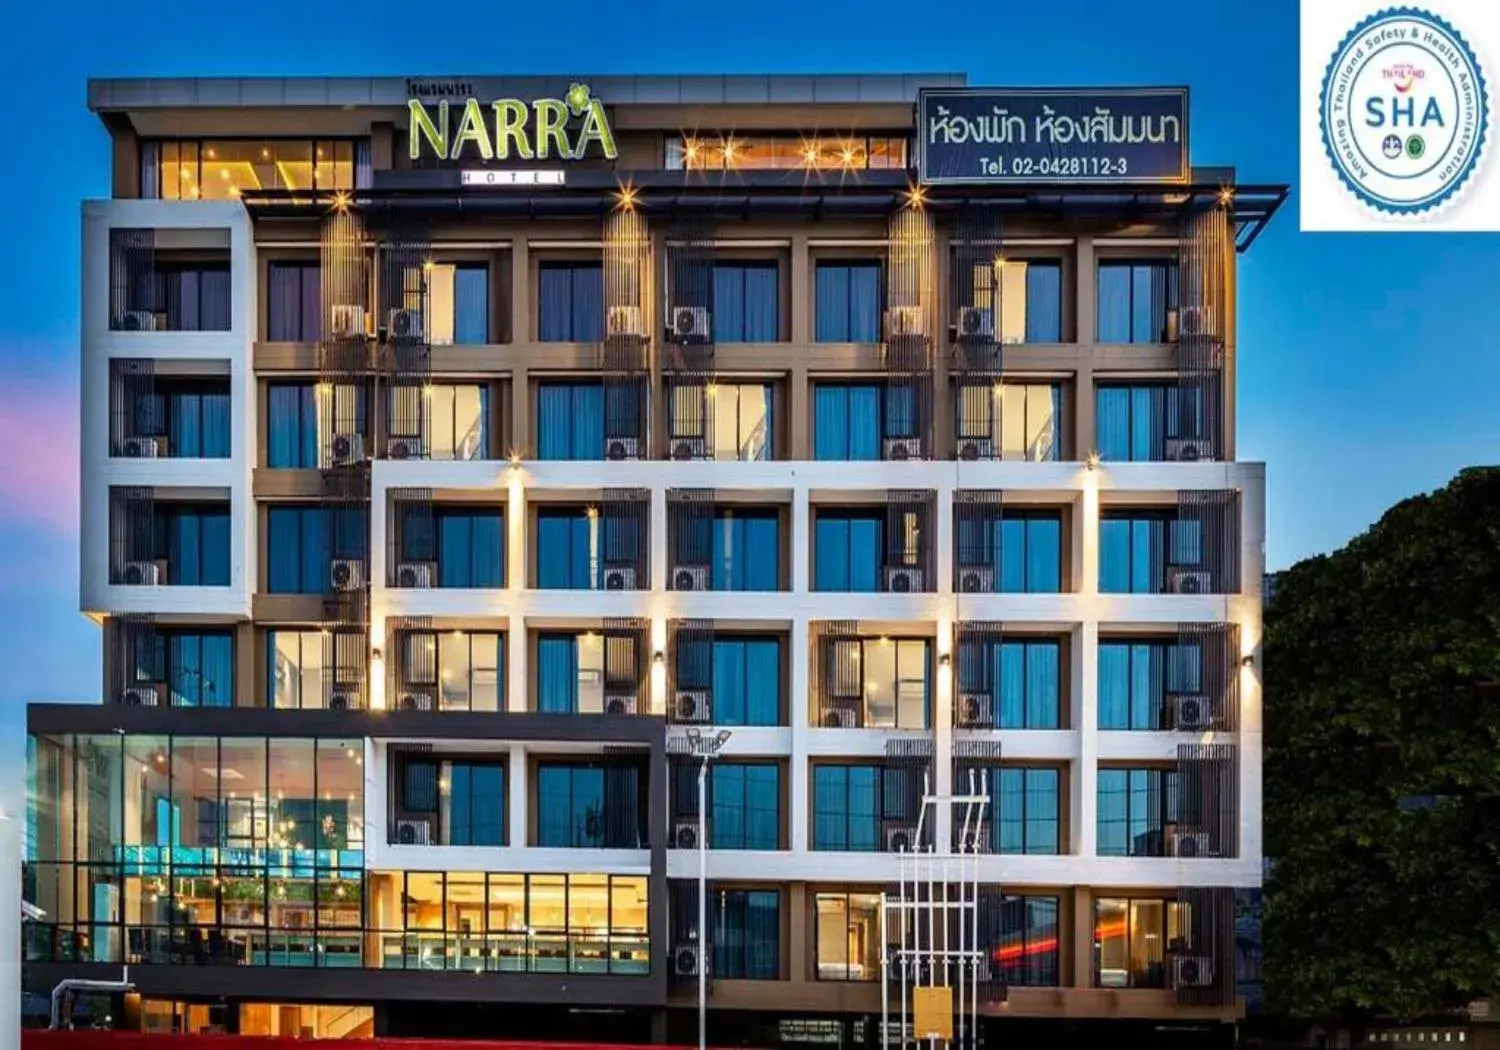 Logo/Certificate/Sign, Property Building in Narra hotel